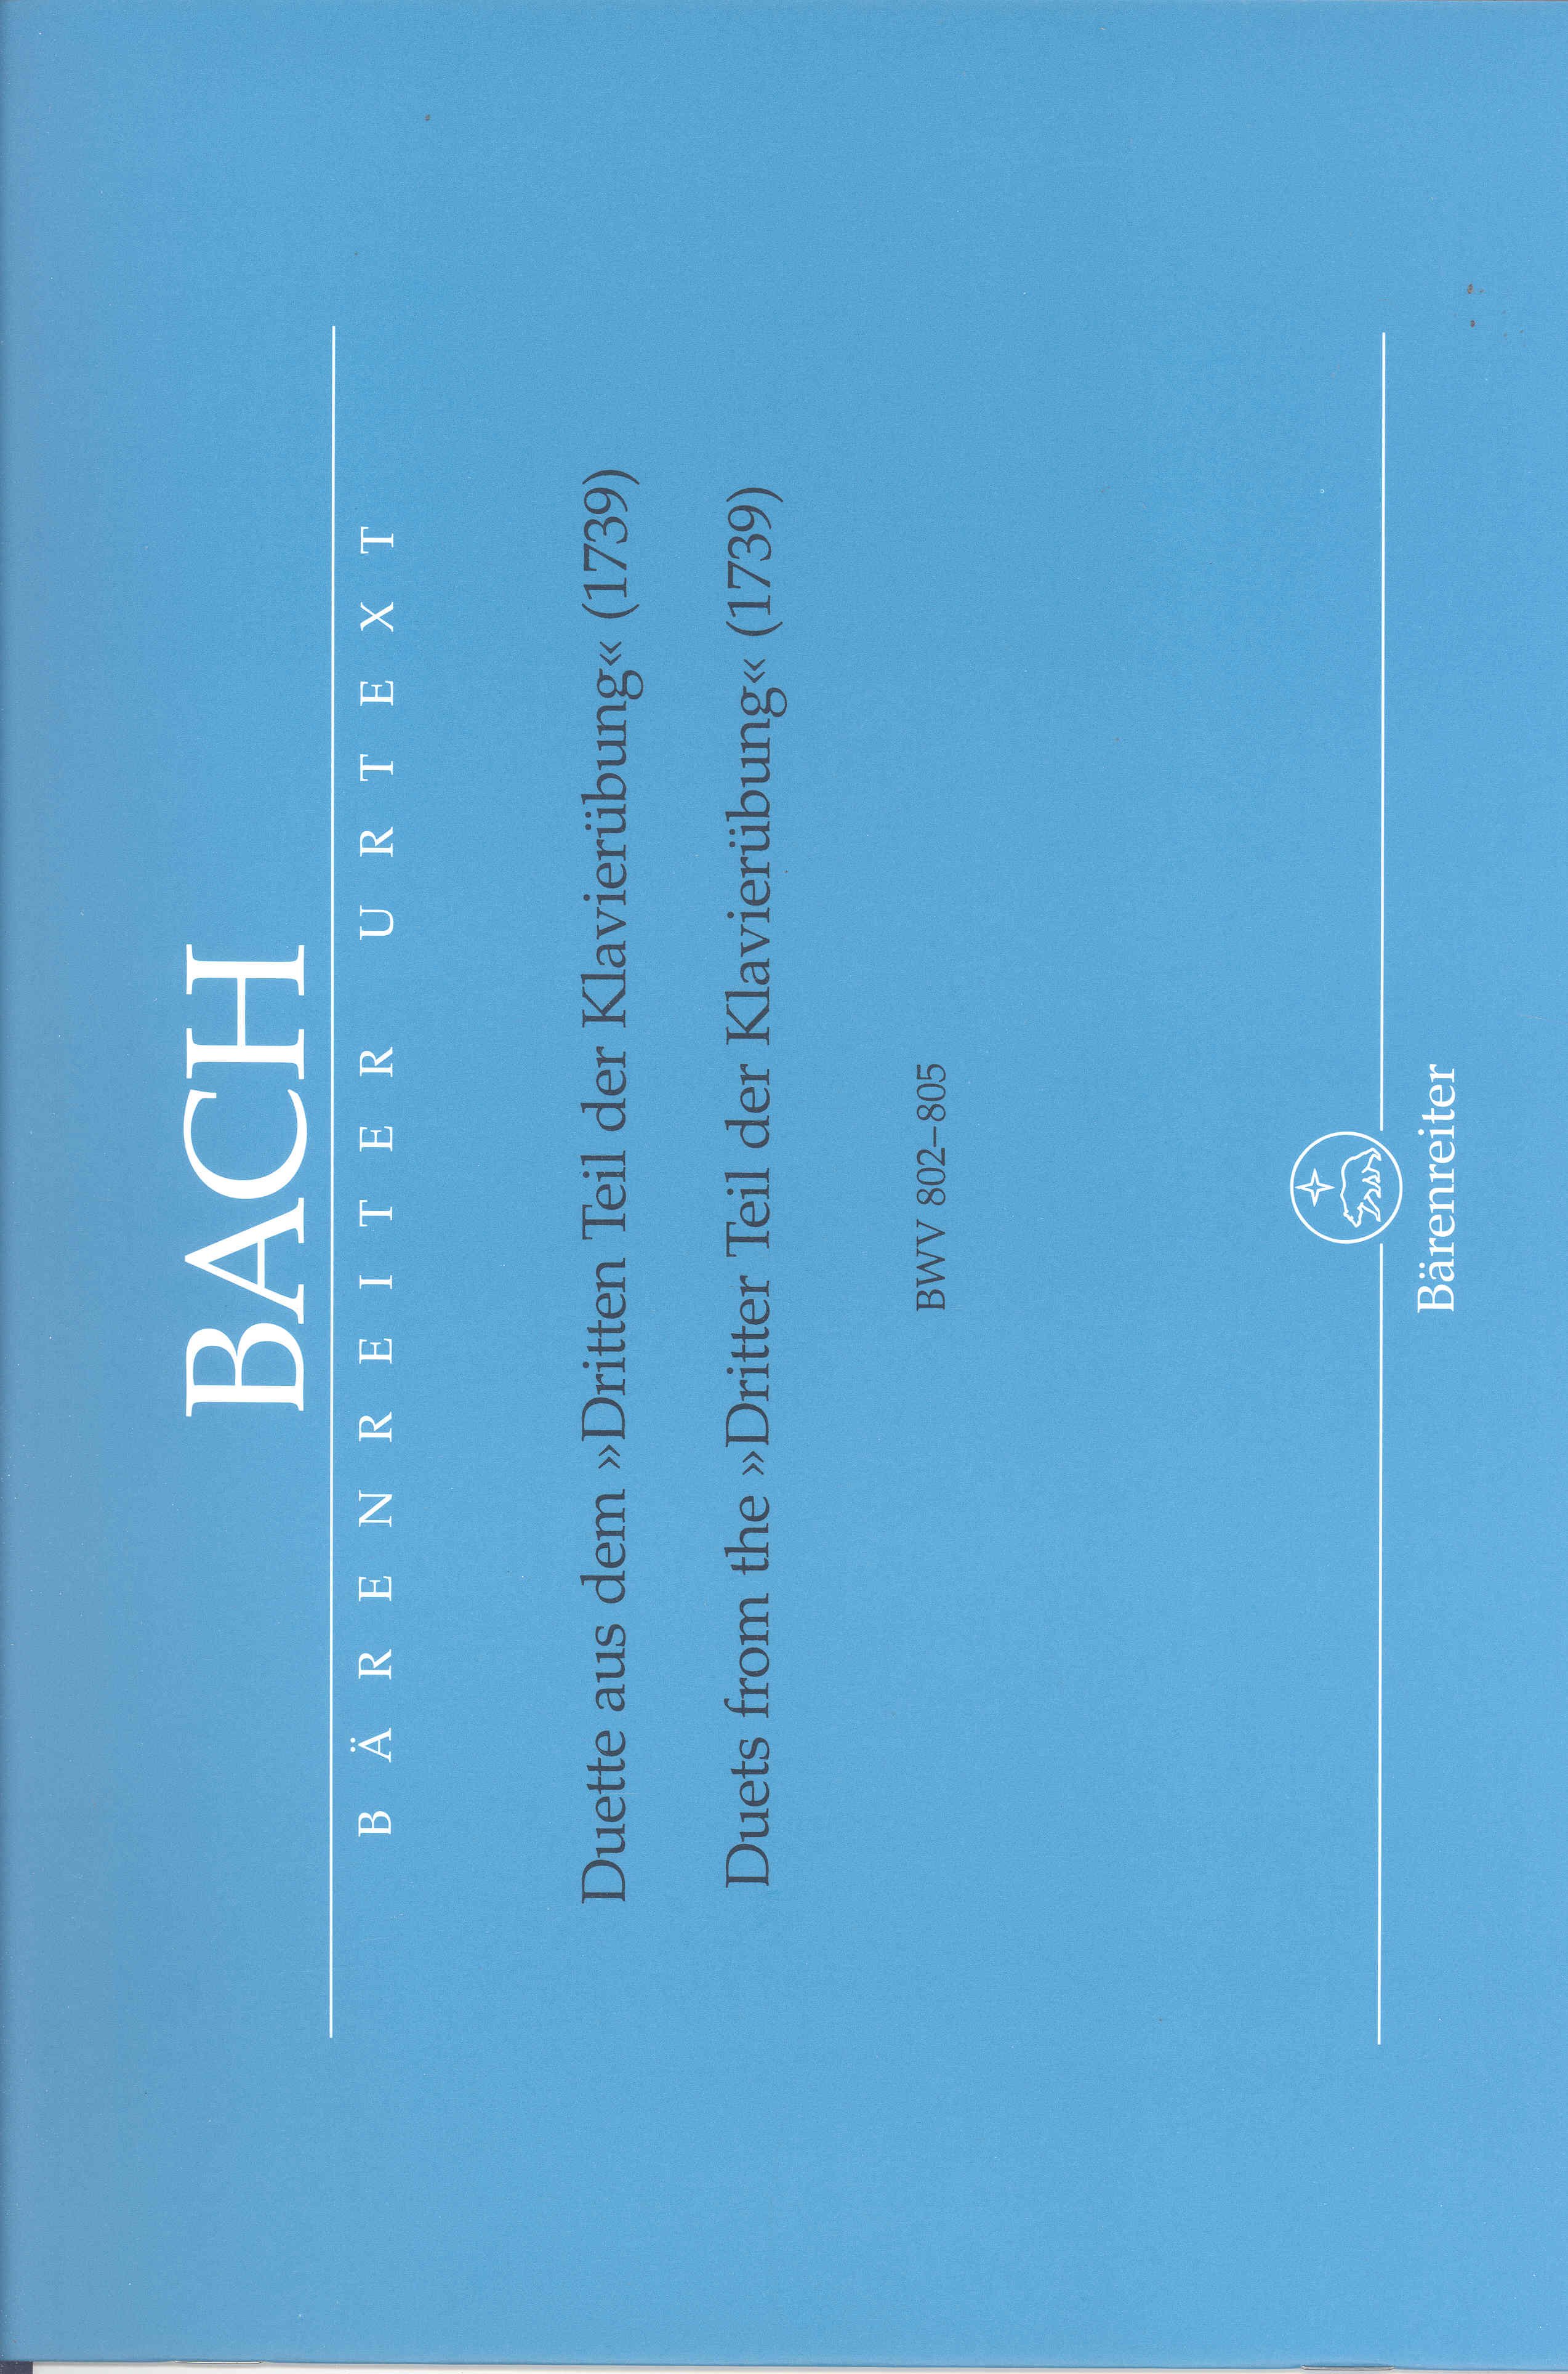 Bach Klavieruebung Duets (bwv 802-805) Sheet Music Songbook